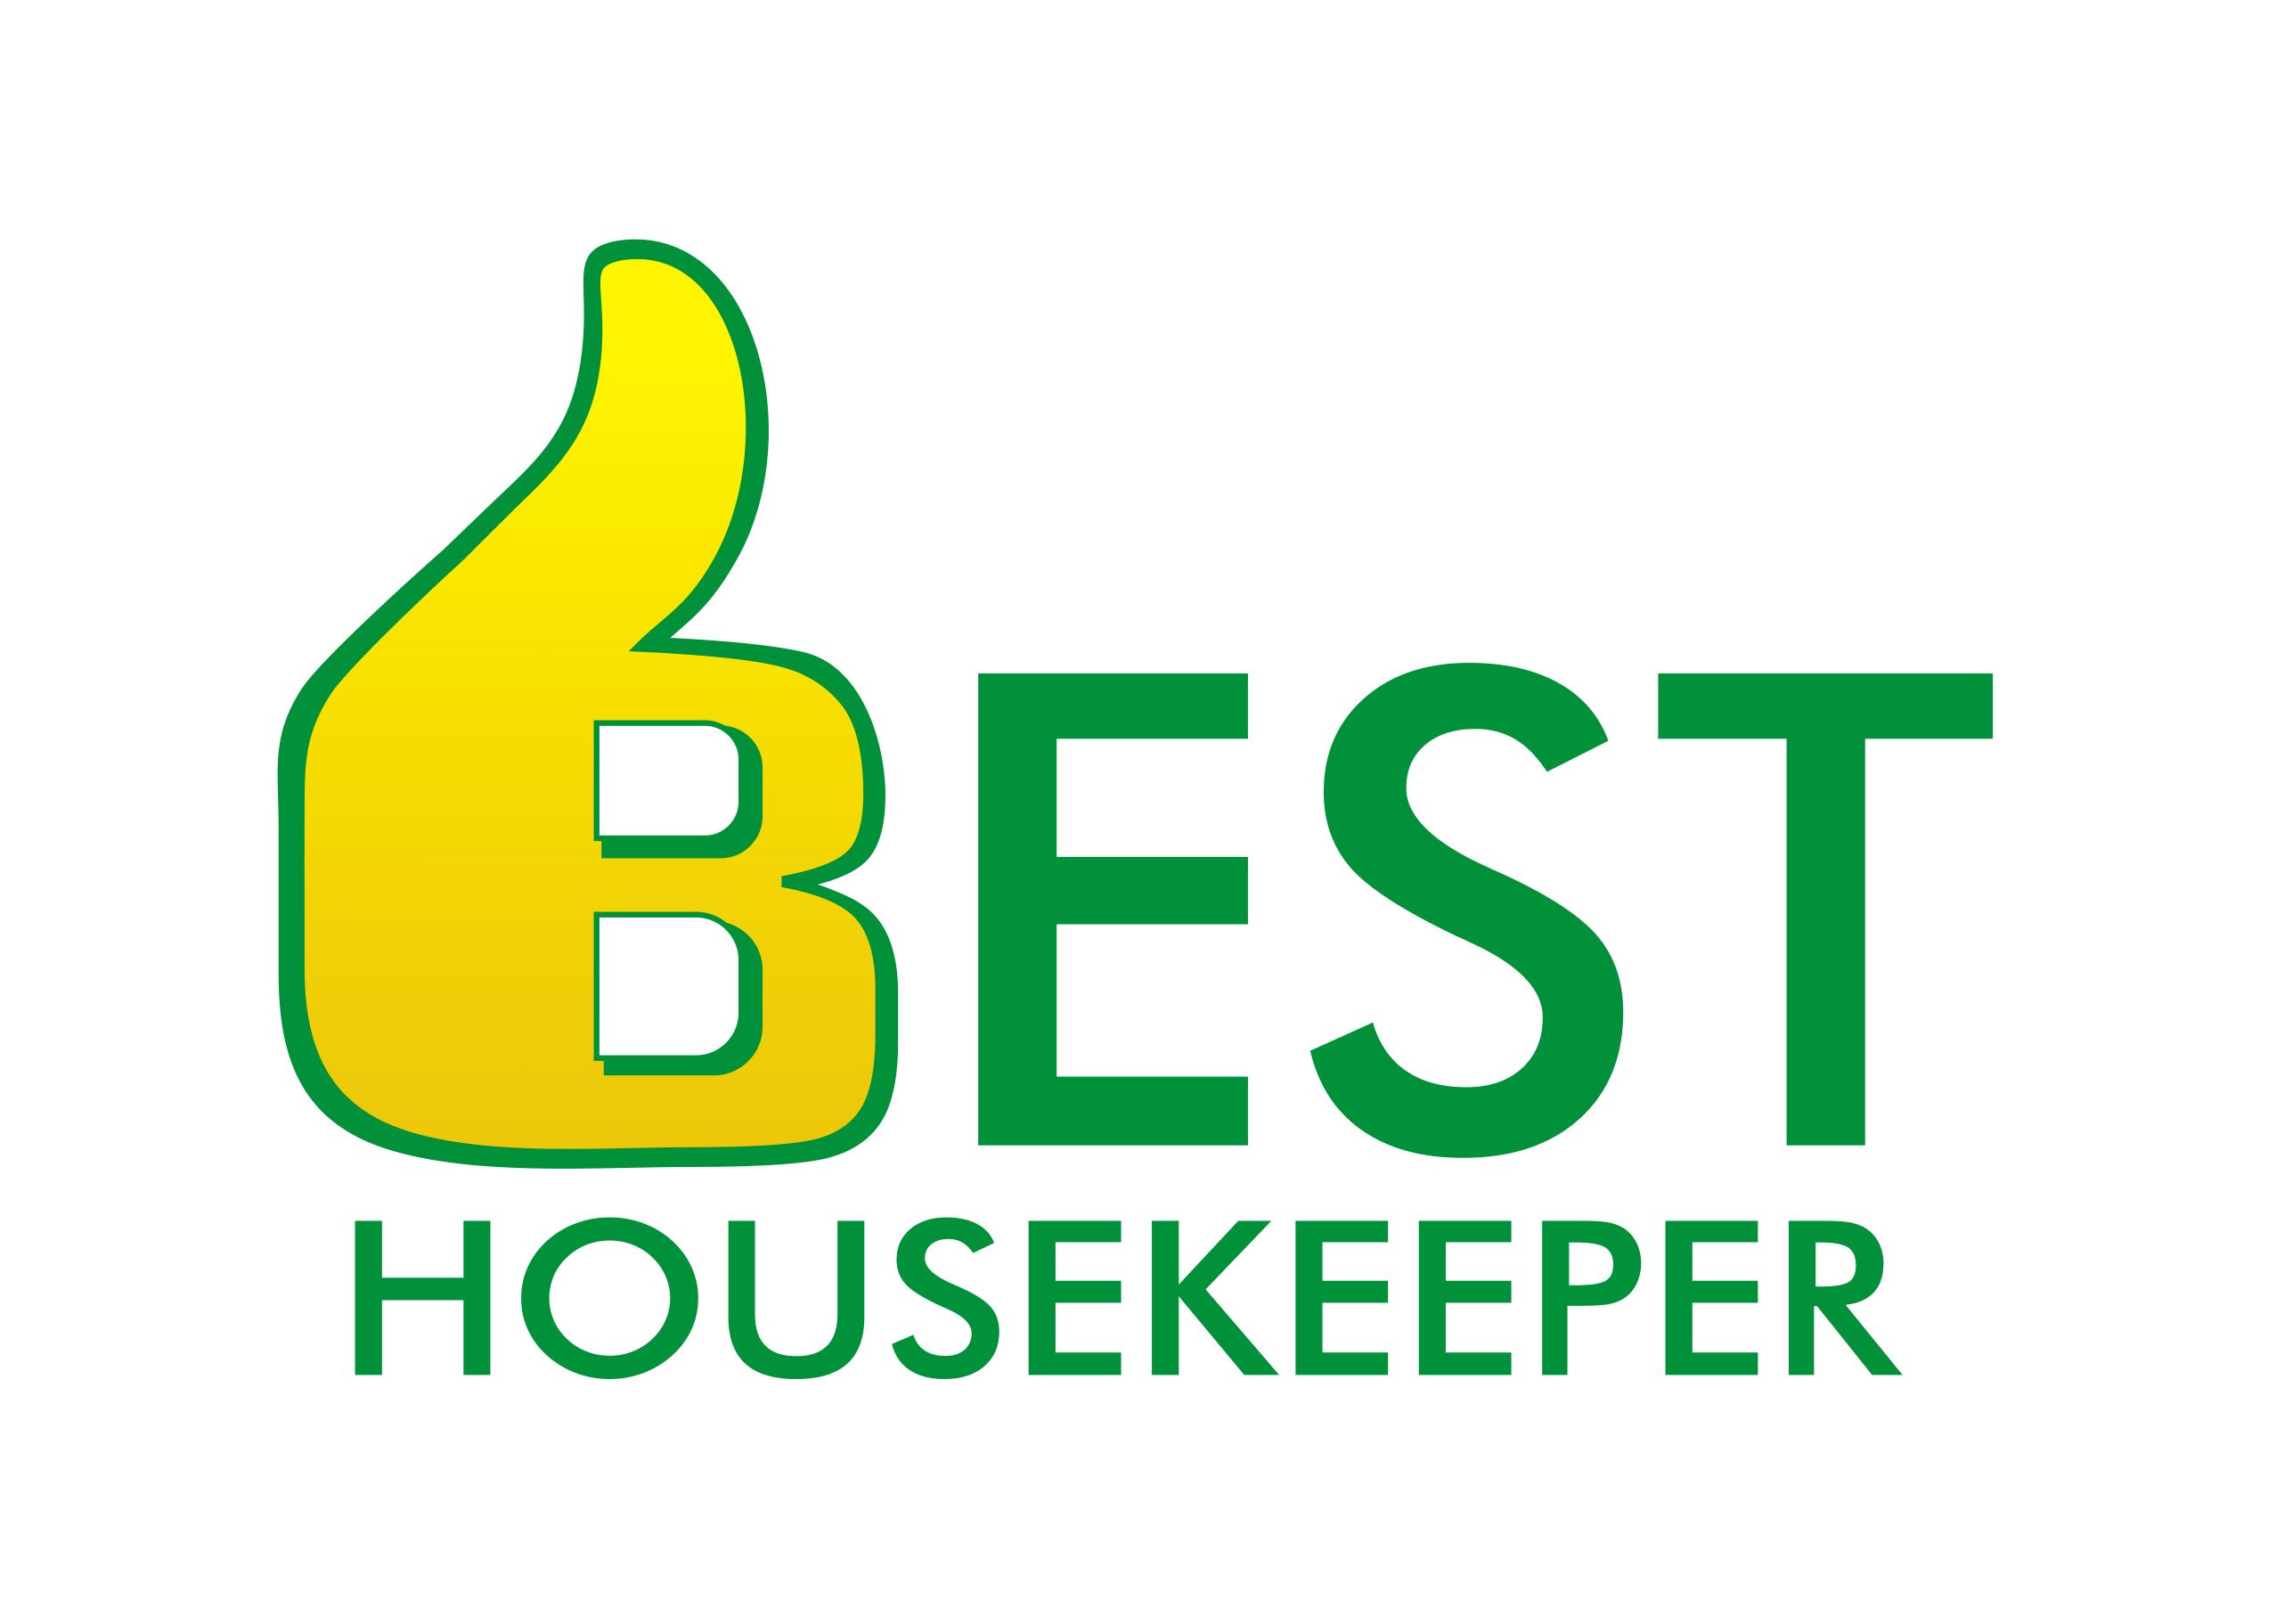 Гуд мир. Логотип good Helper. Housekeeper управляющая компания логотип Красногорск. Good Housekeeping logo.